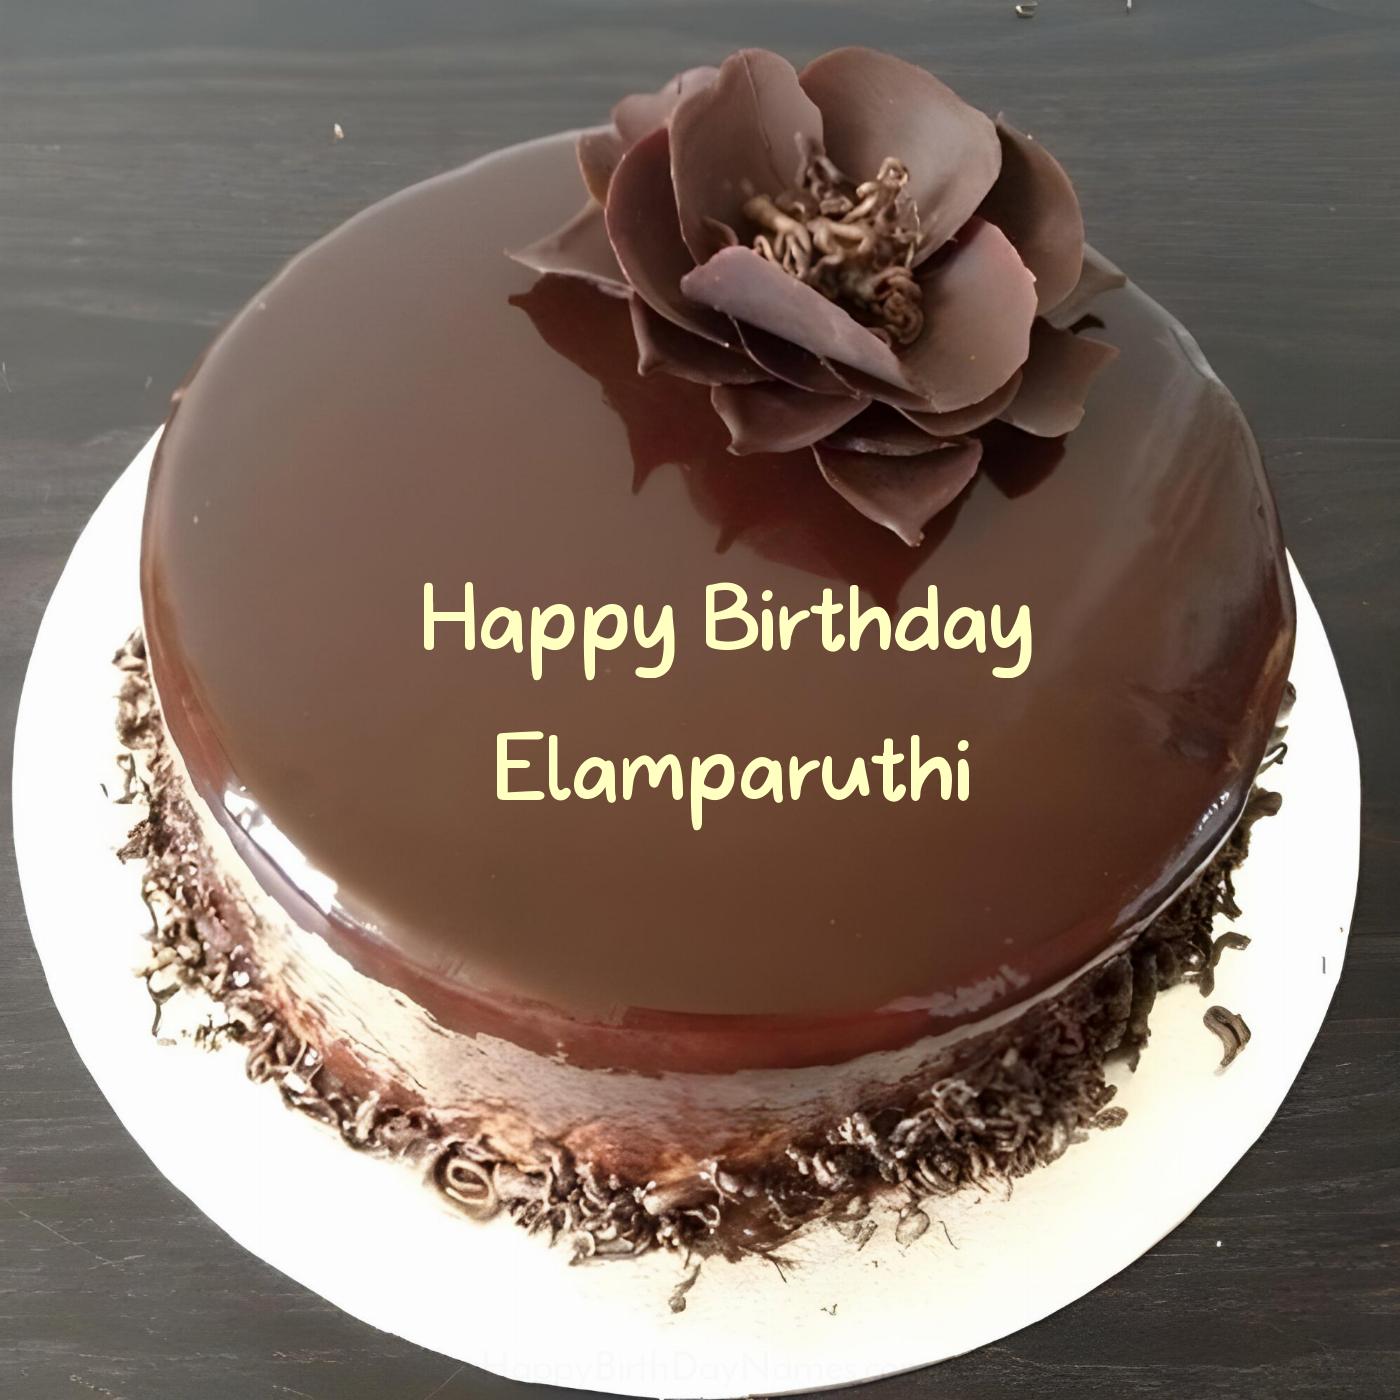 Happy Birthday Elamparuthi Chocolate Flower Cake